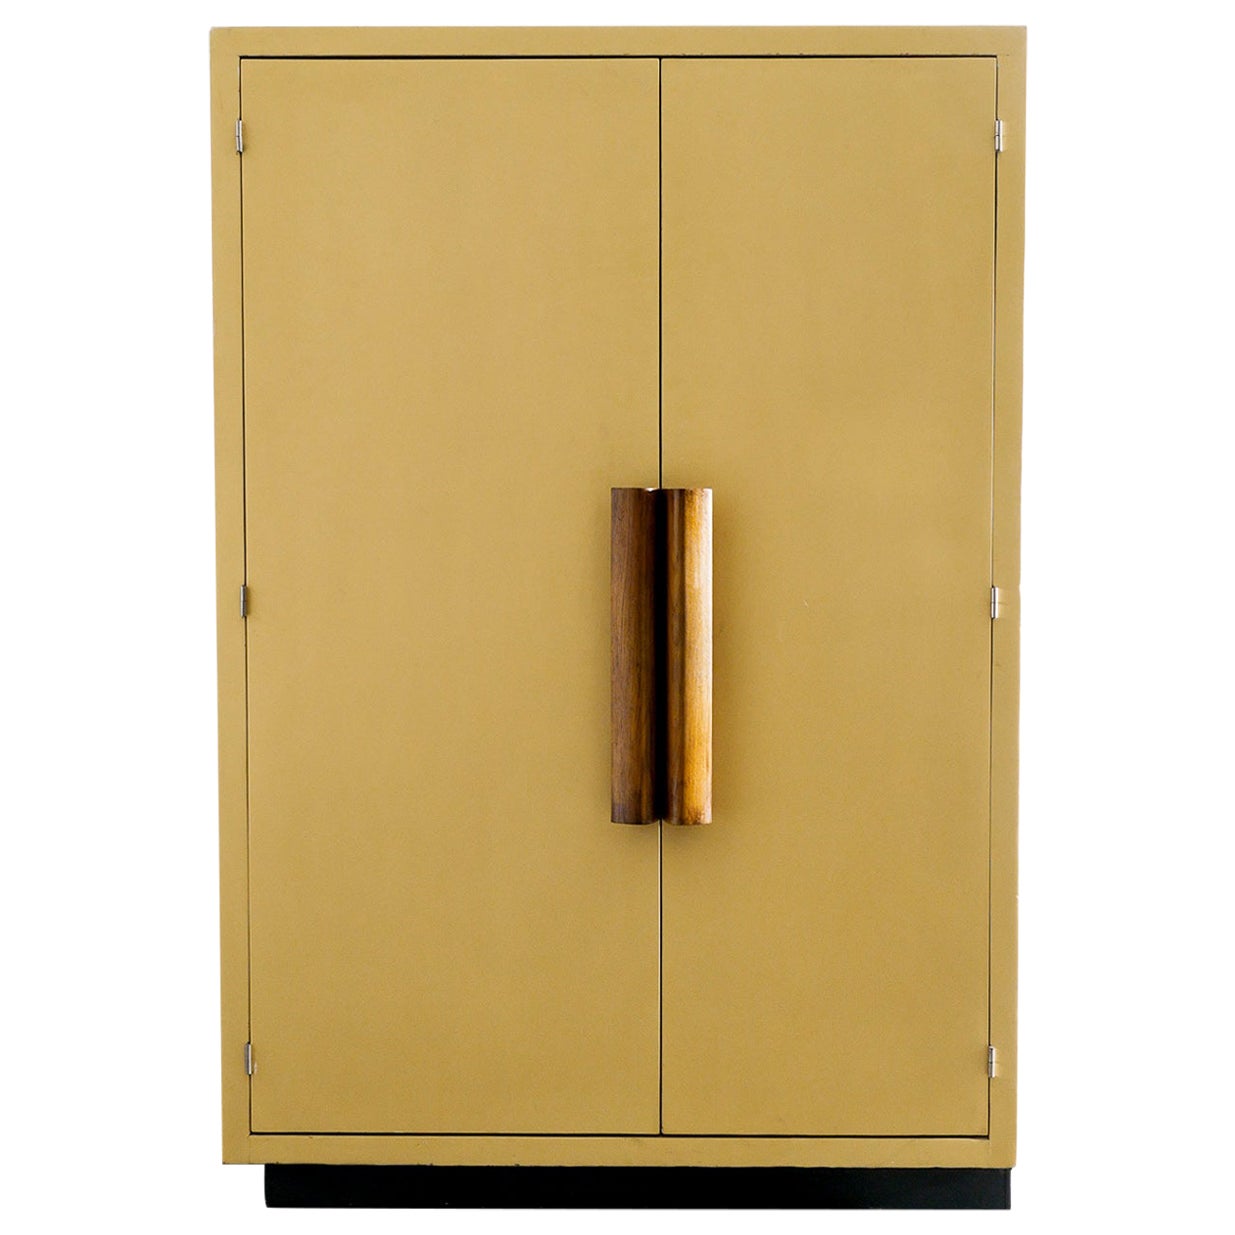 Le Corbusier Wooden Midcentury Dresser / Wardrobe Produced in Marseille, 1949